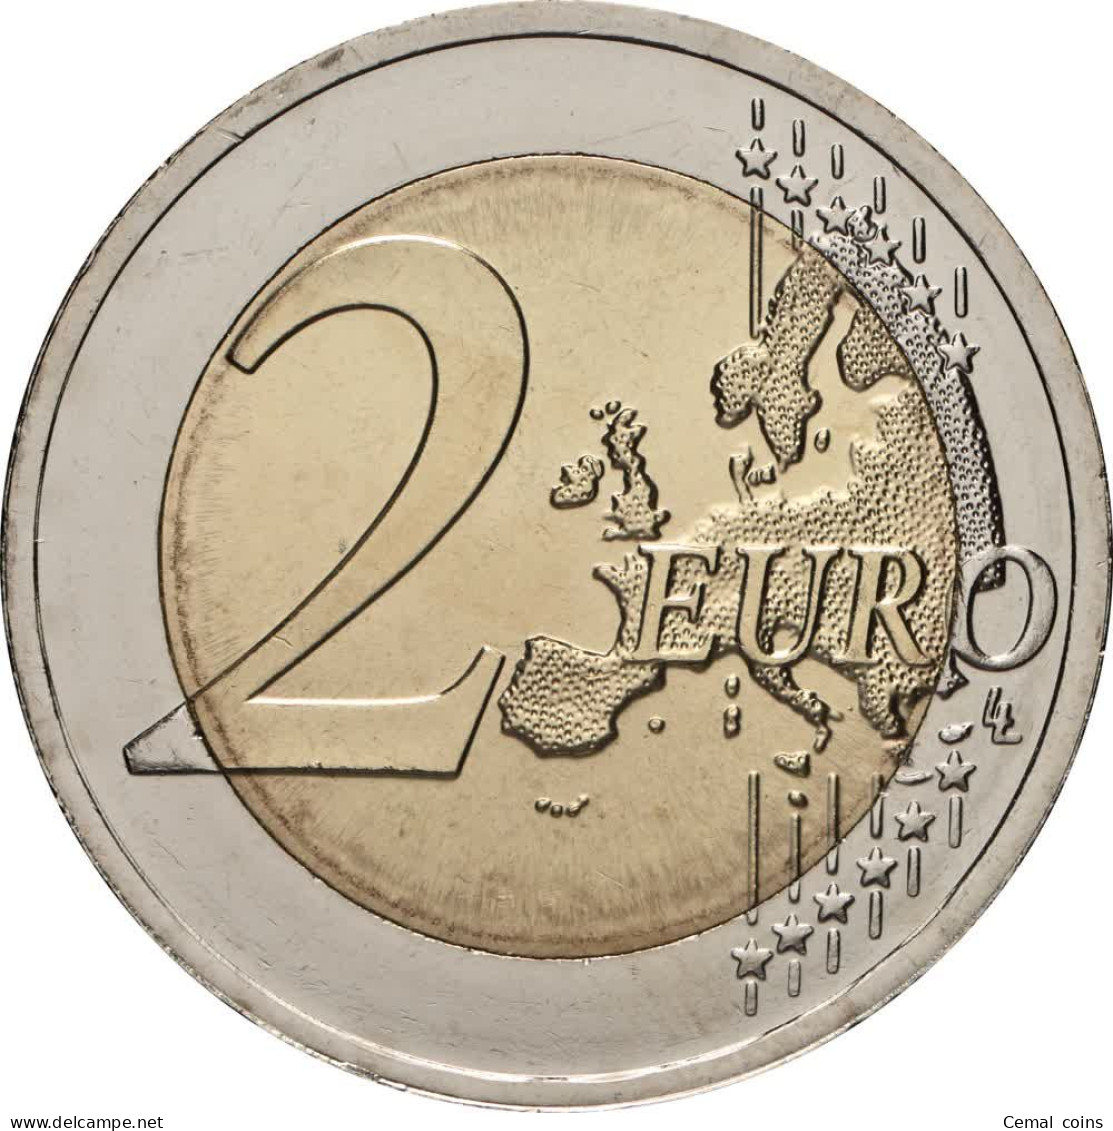 2 Euro 2022 Lithuania Coin - Suvalkija. - Lituania